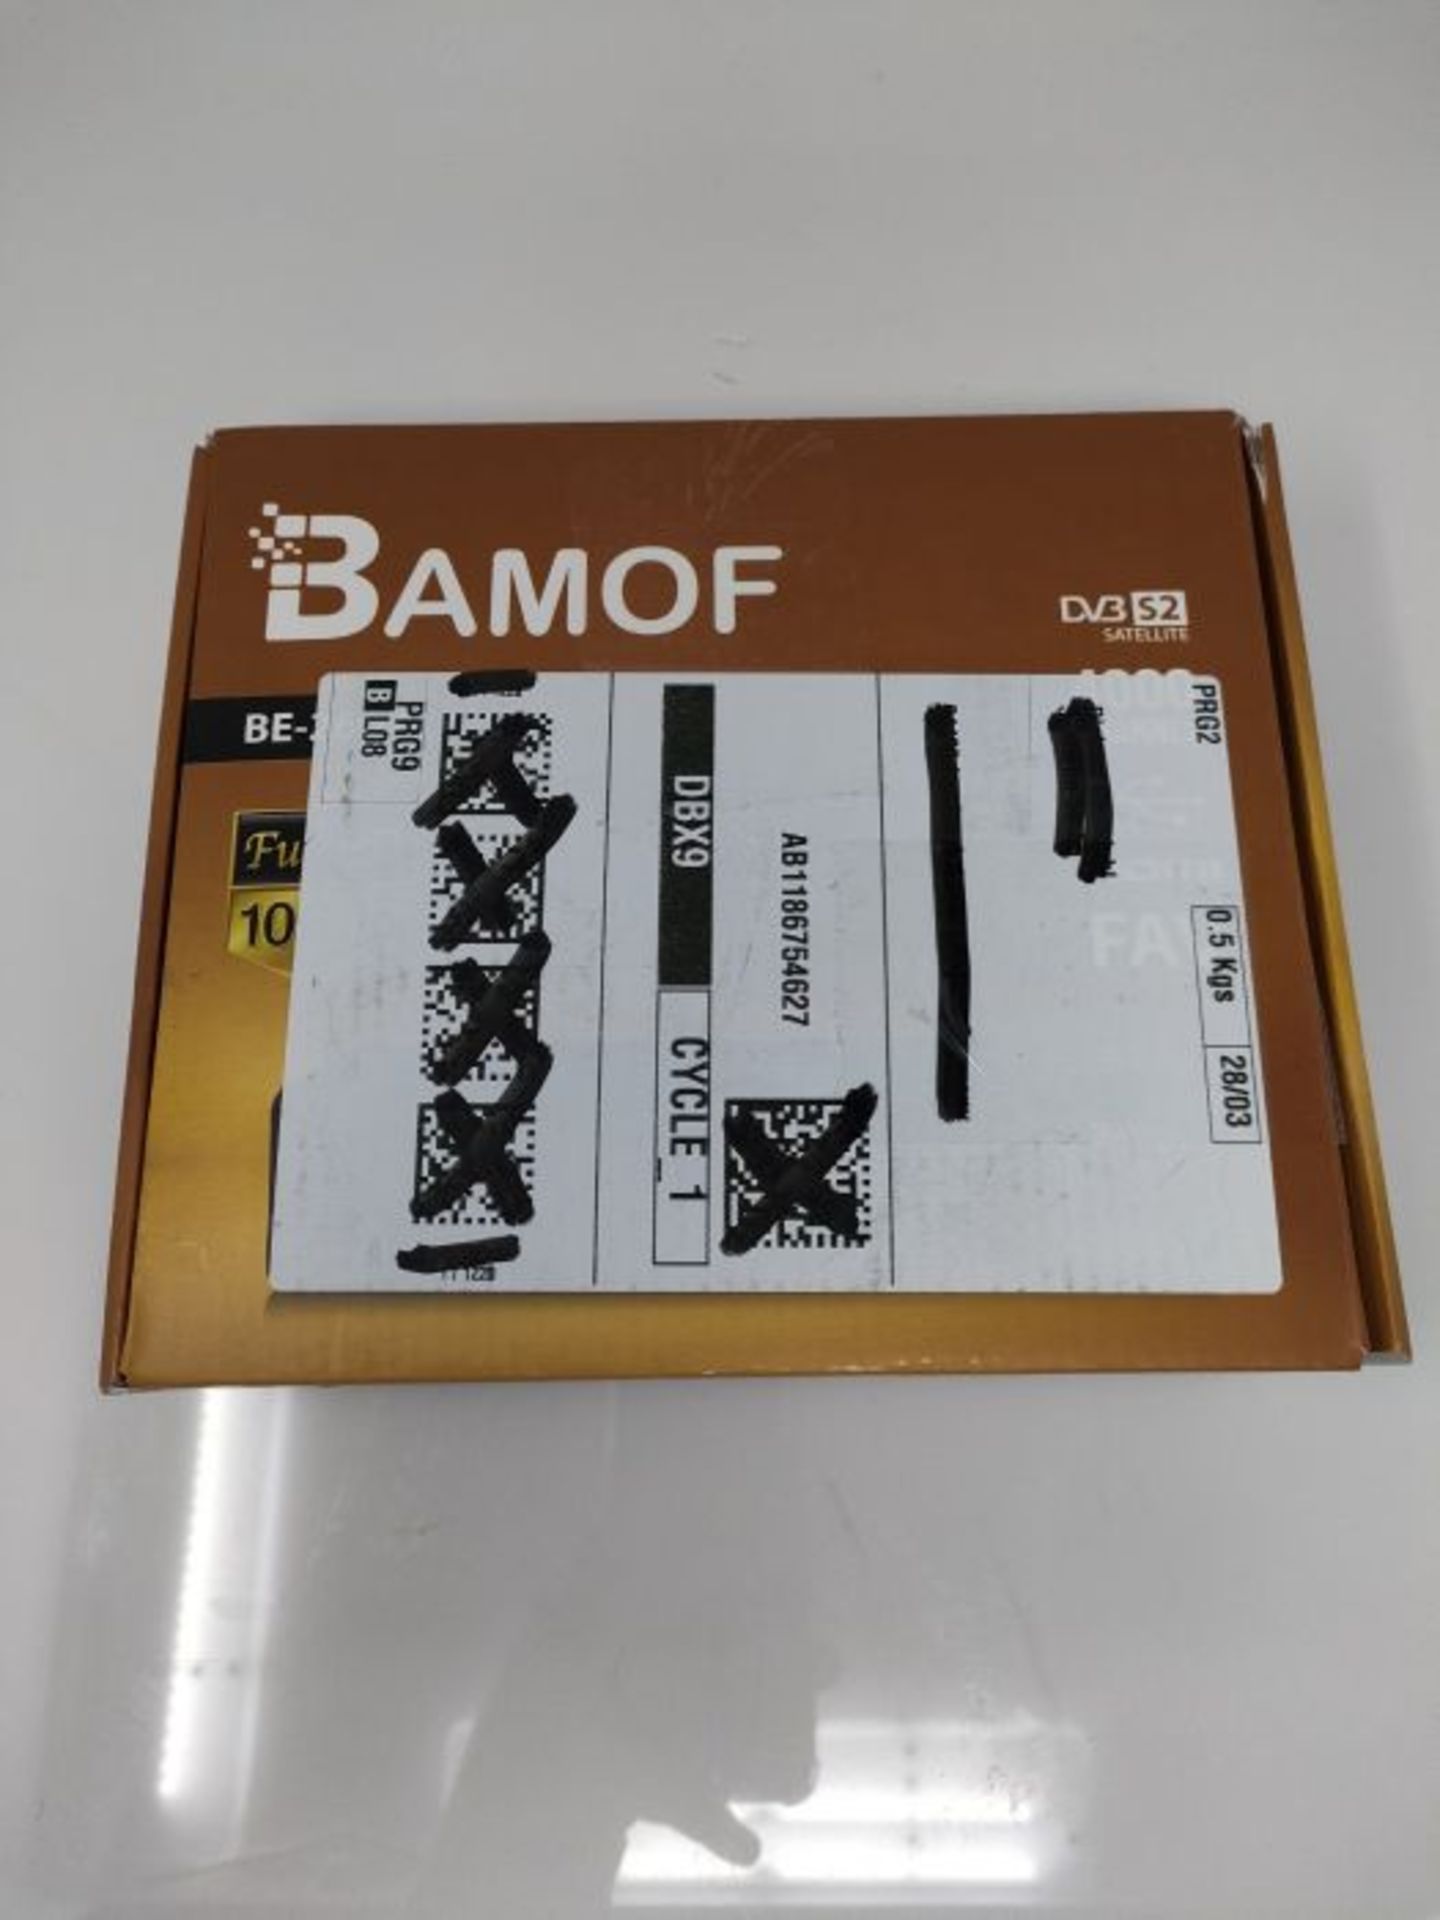 Bamof BE-2607 Digital Satellite Satellite Receiver (HDTV, DVB-S/S2, HDMI, SCART, 2x US - Image 2 of 3